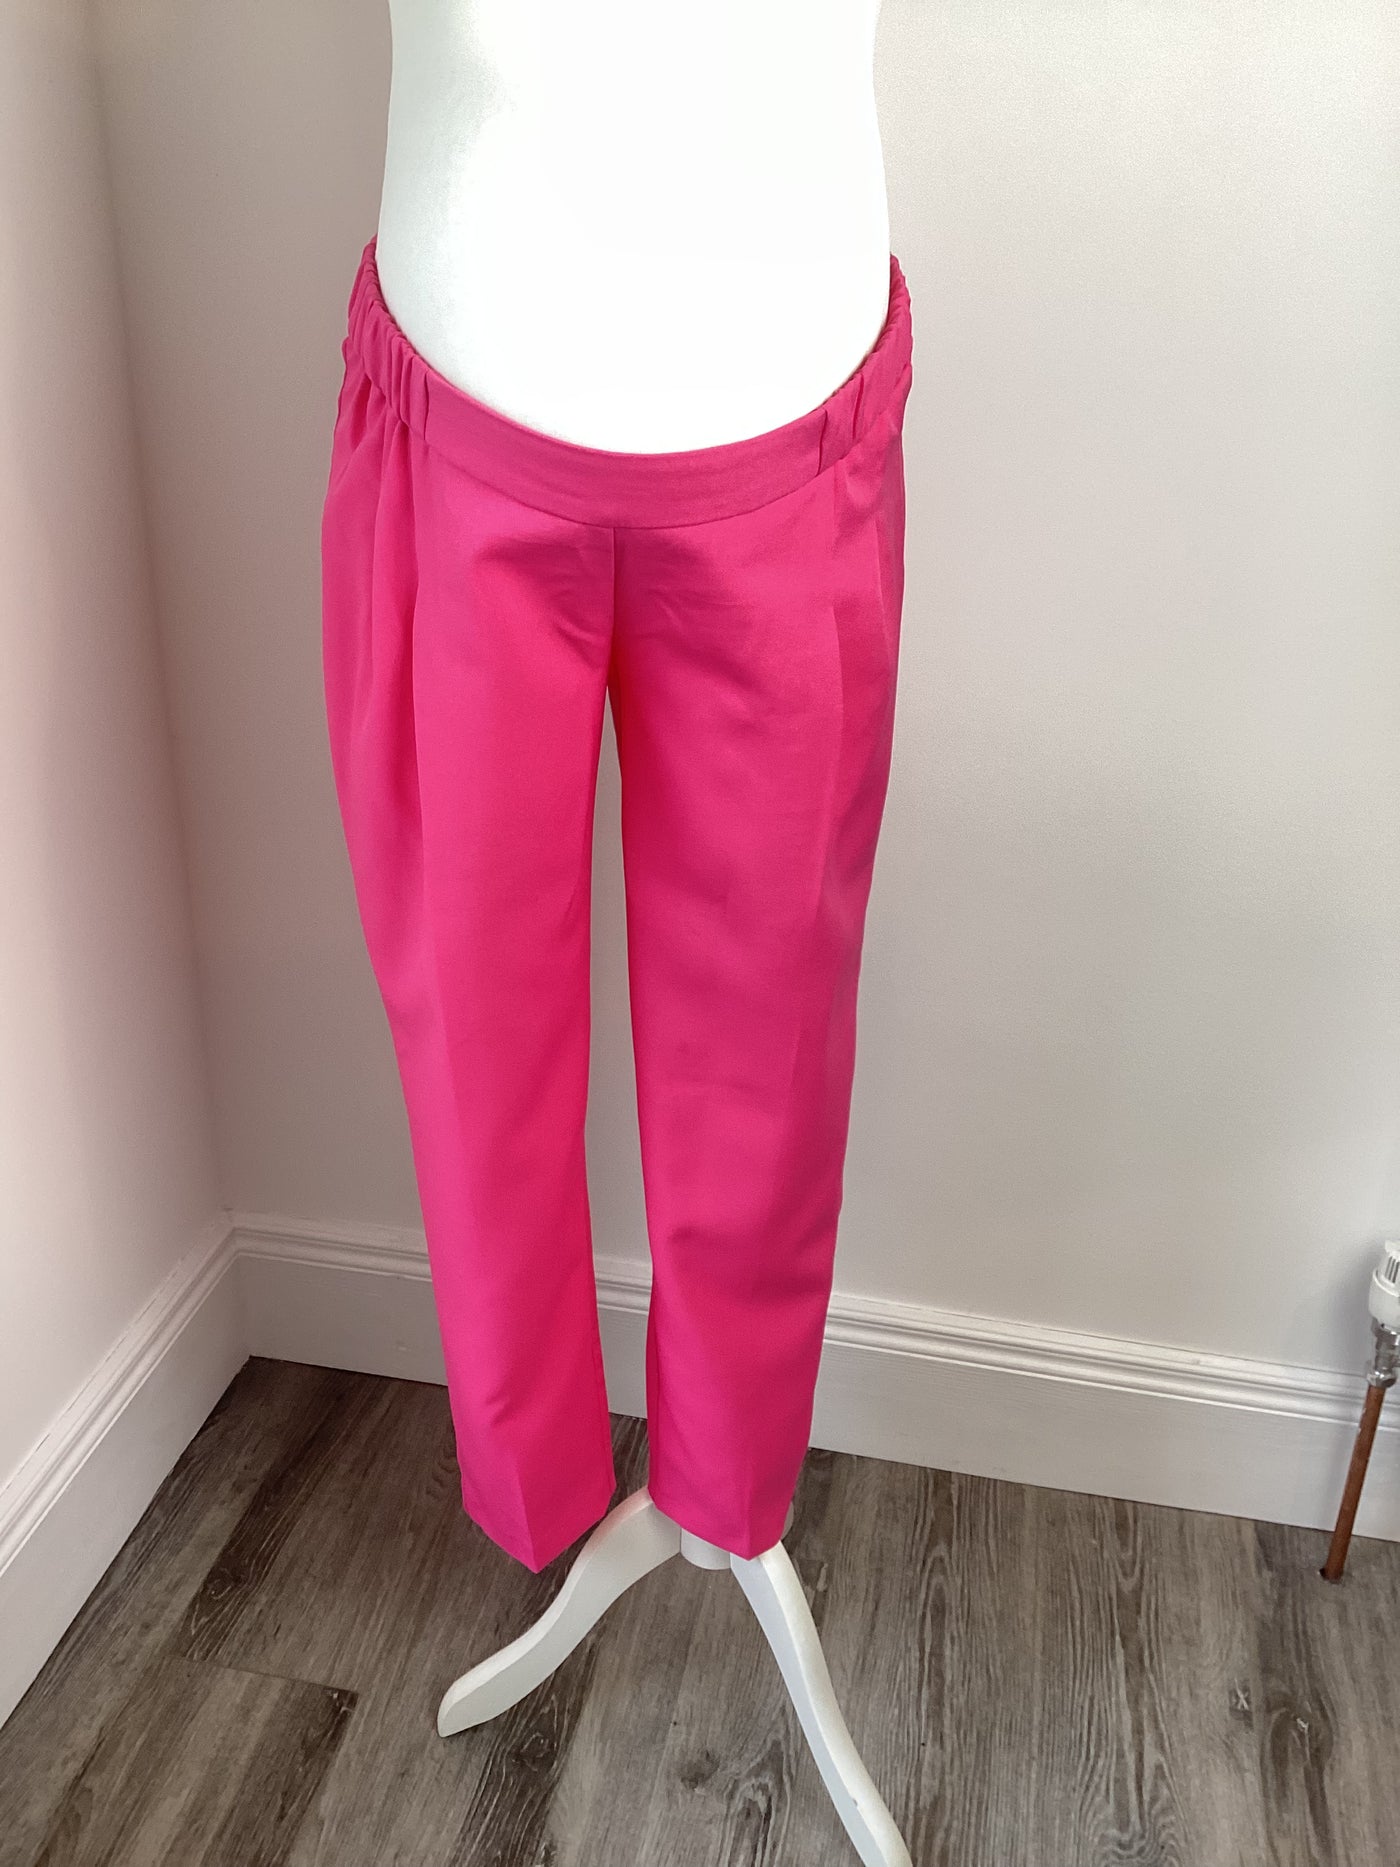 Asos Maternity bubblegum pink ankle grazer trousers - Size 10